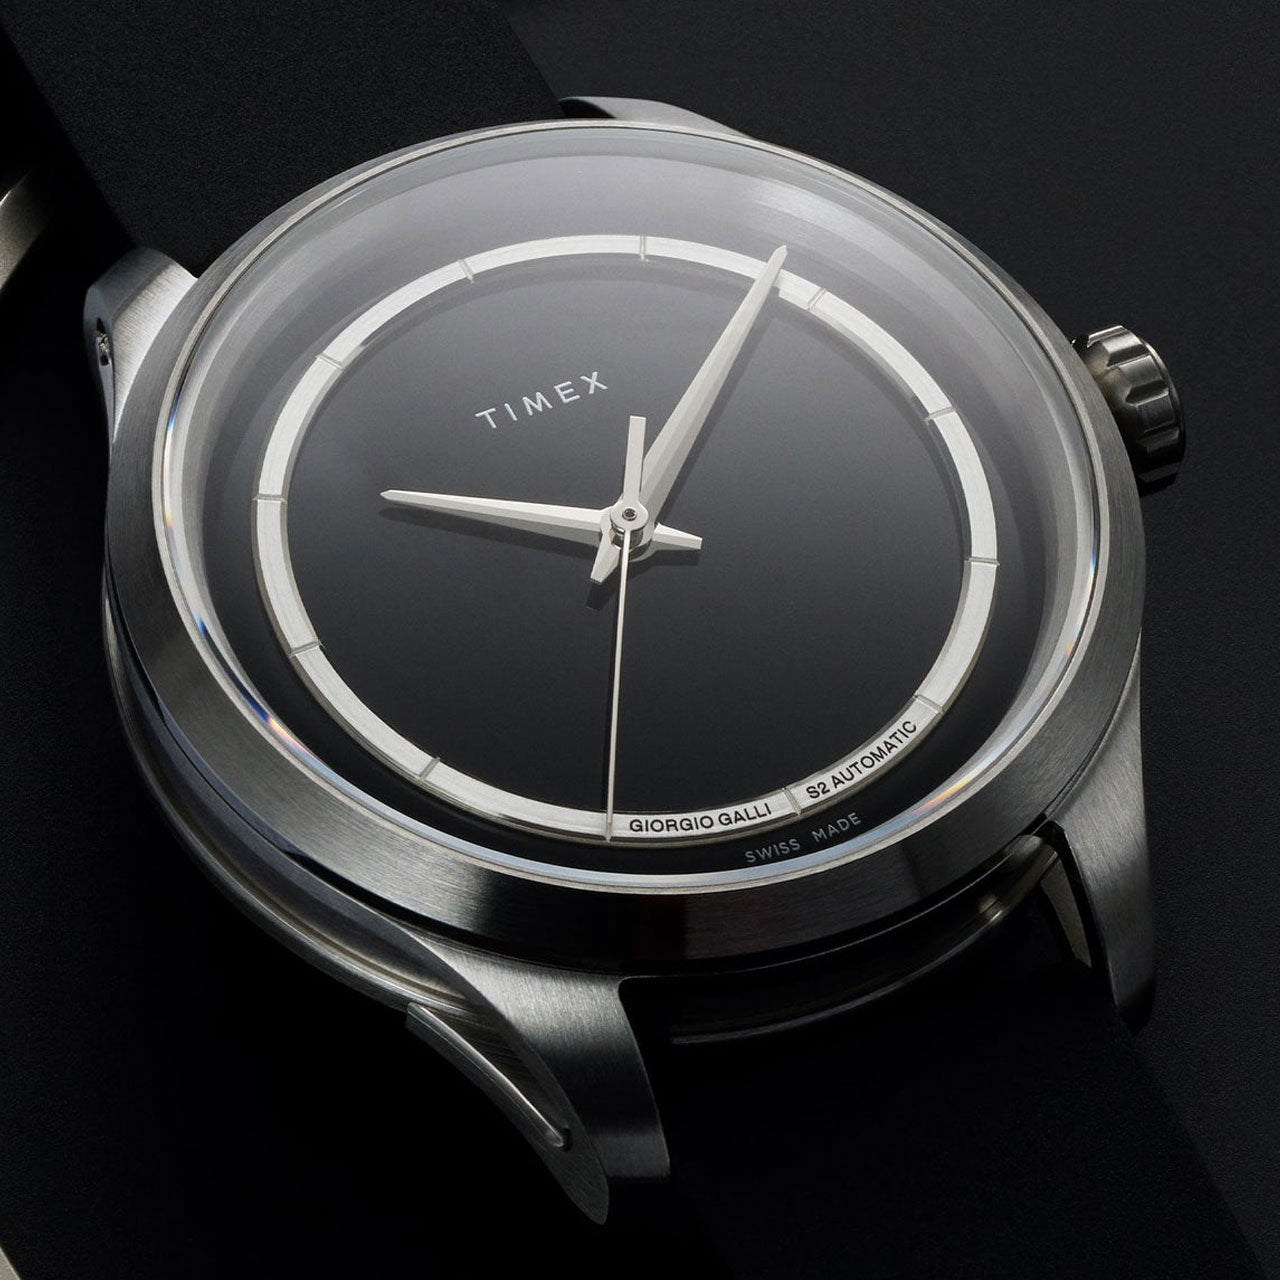 Timex Giorgio Galli S2 Watch